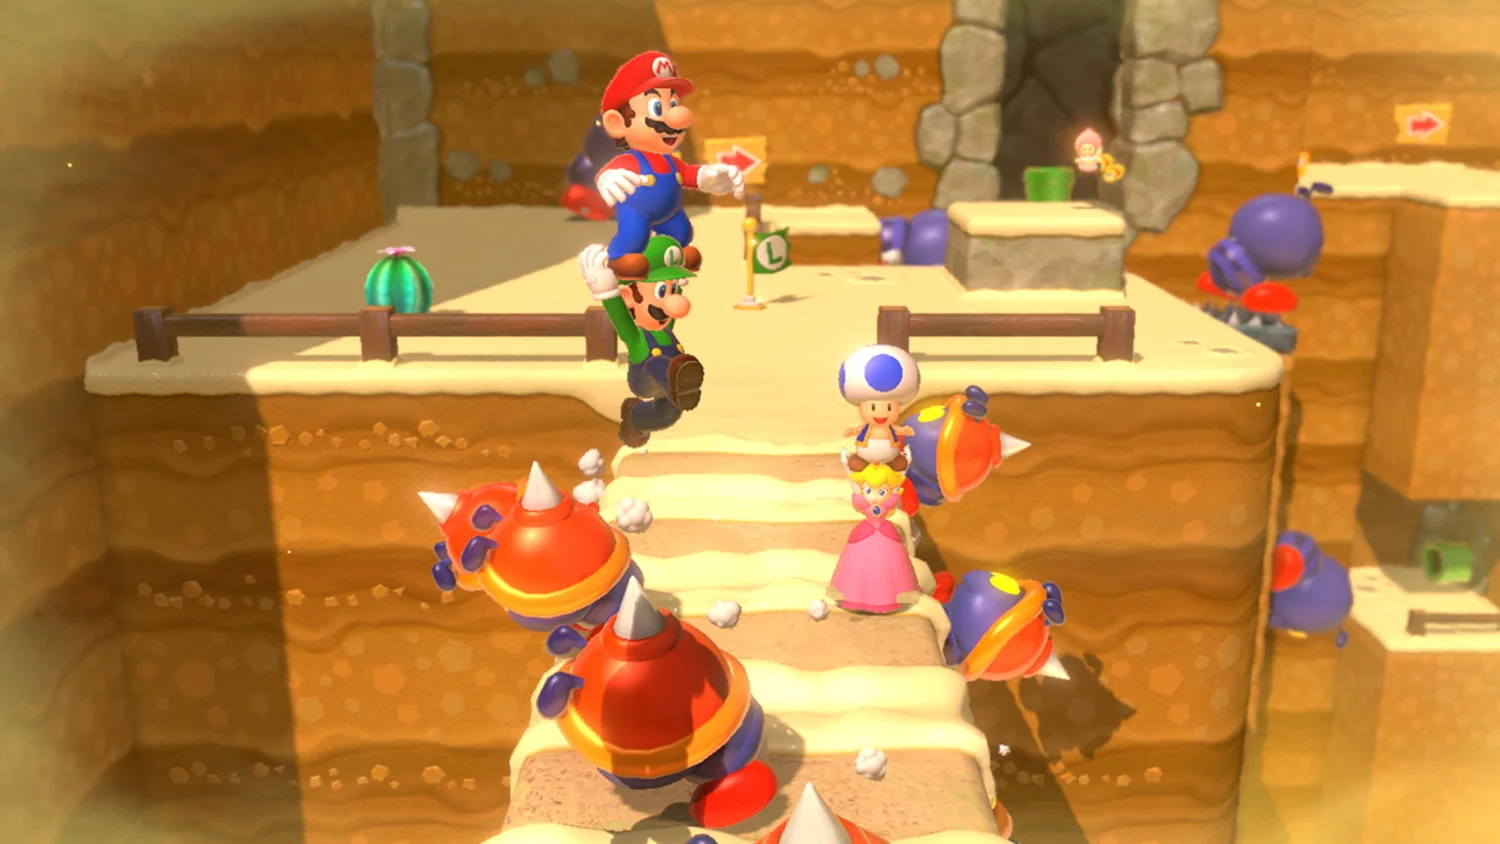 Jogo Super Mario 3D World + Bowsers Fury - Nintendo Switch